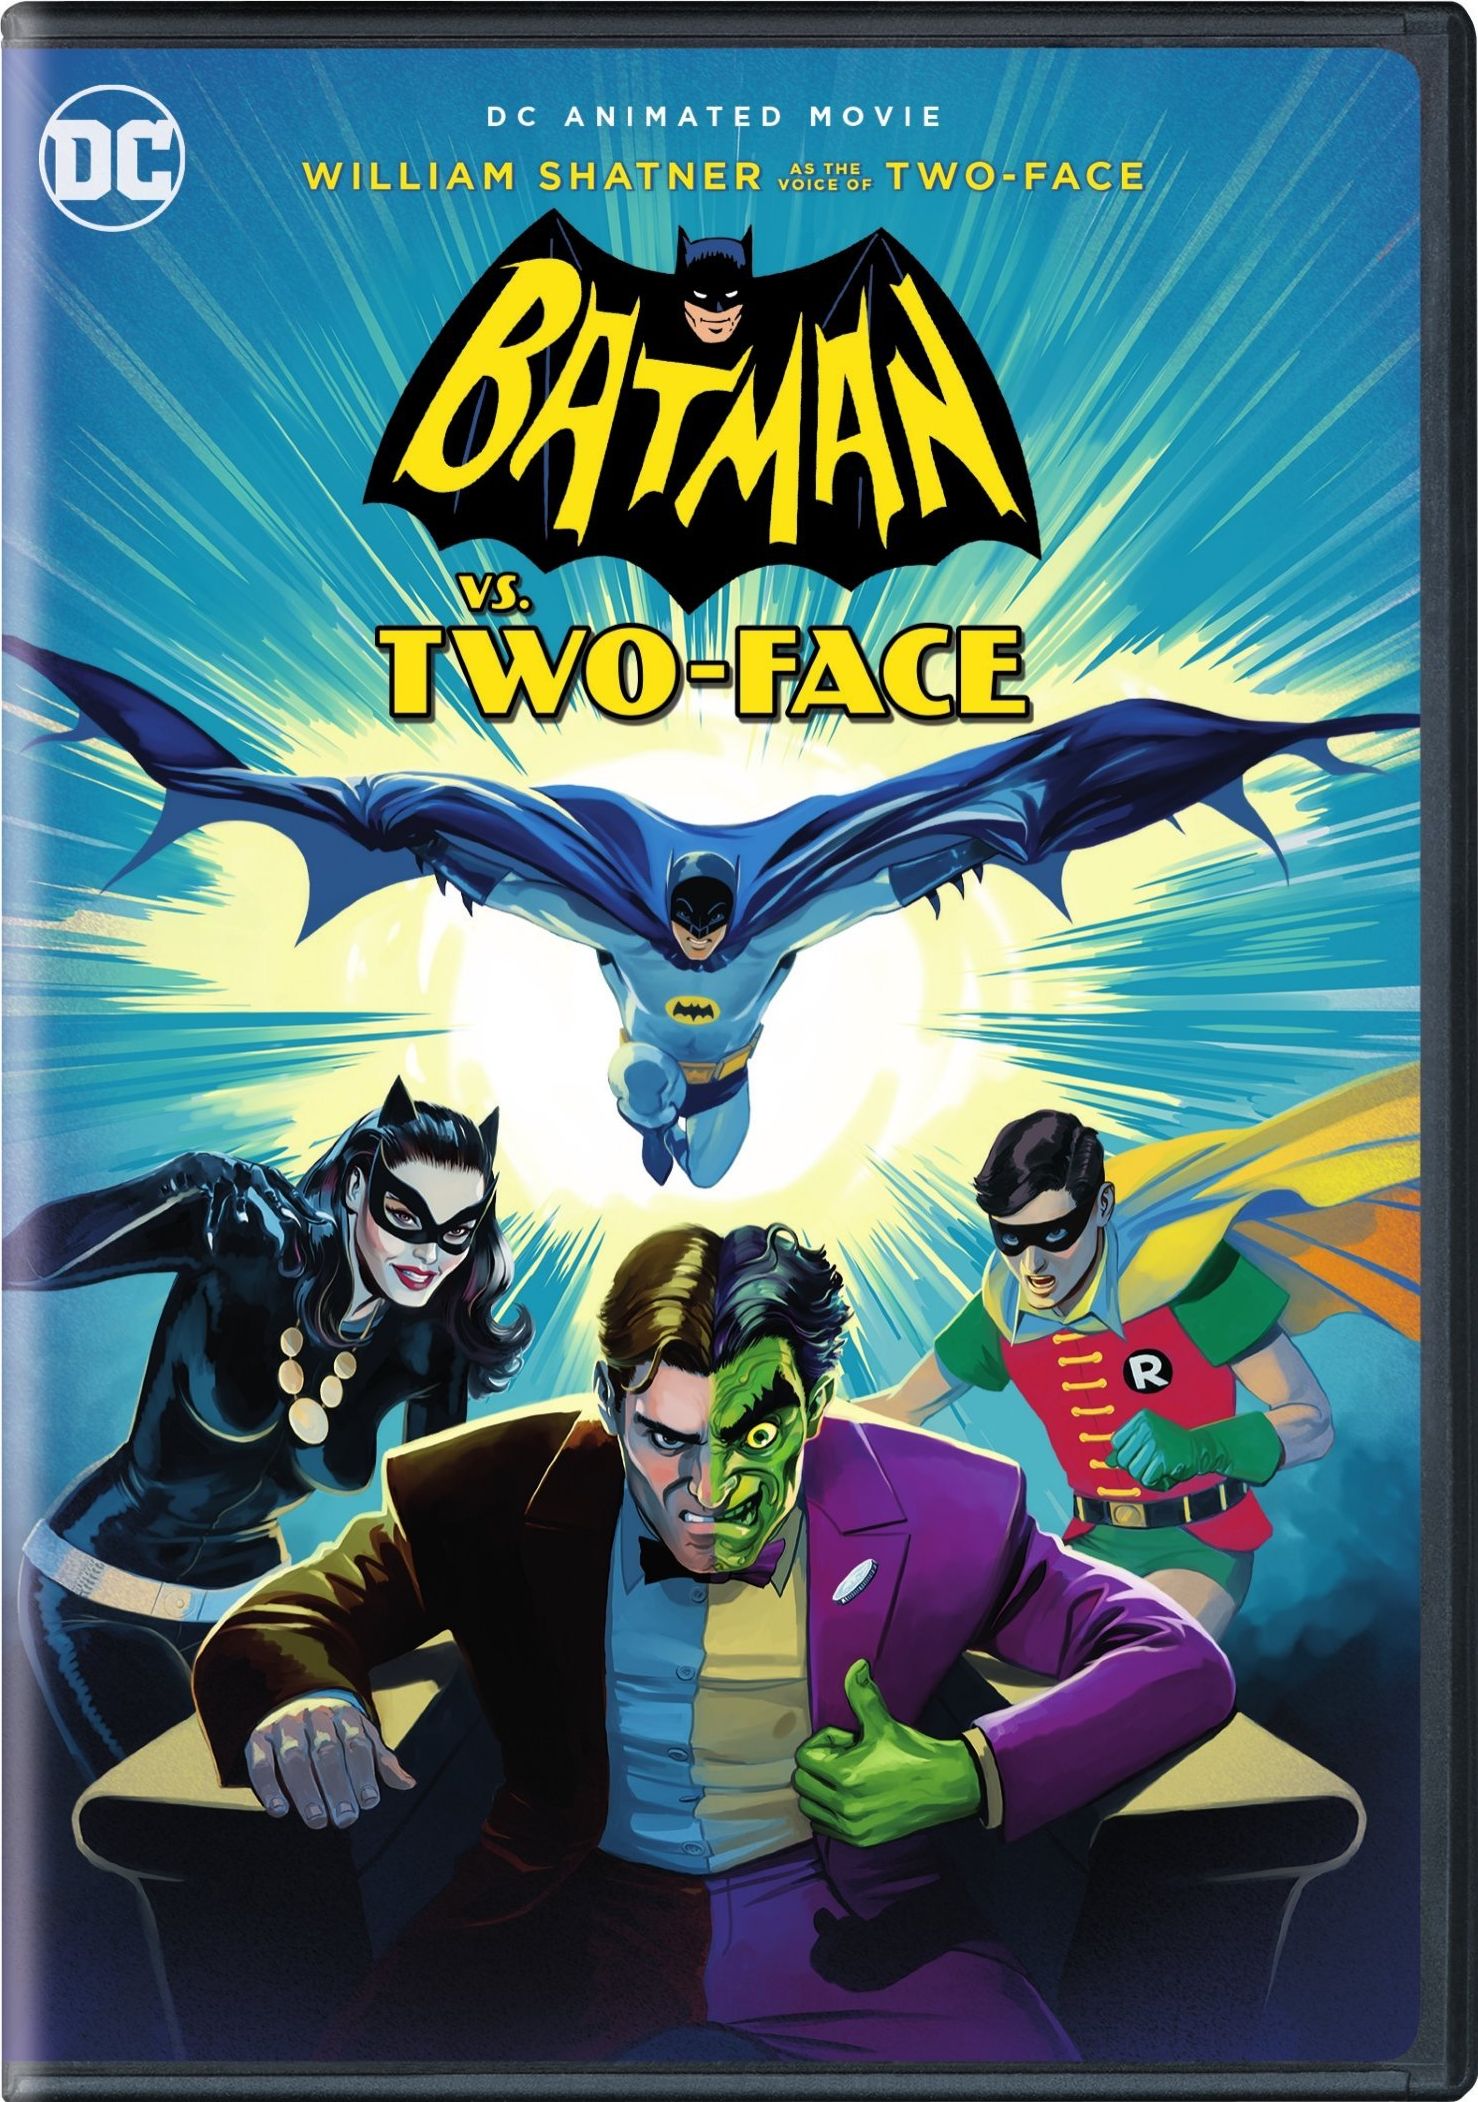 Batman vs. Two-Face DVD Release Date October 17, 2017